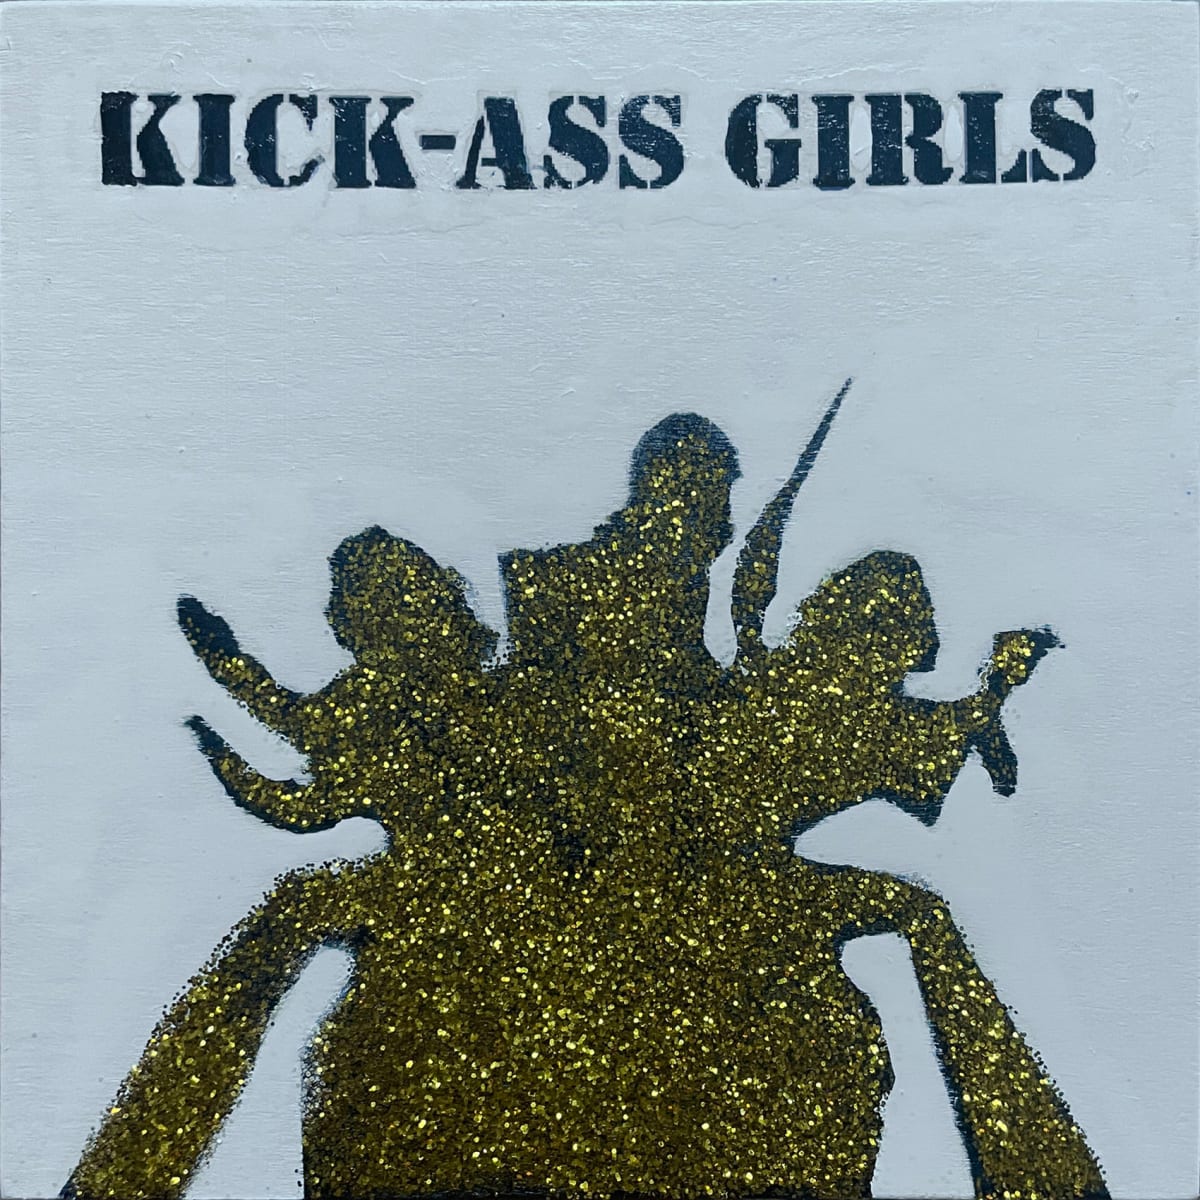 Charlie's Angels - Kick-Ass Girls by Tina Psoinos  Image: Charlie's Angels - Kick-Ass Girls